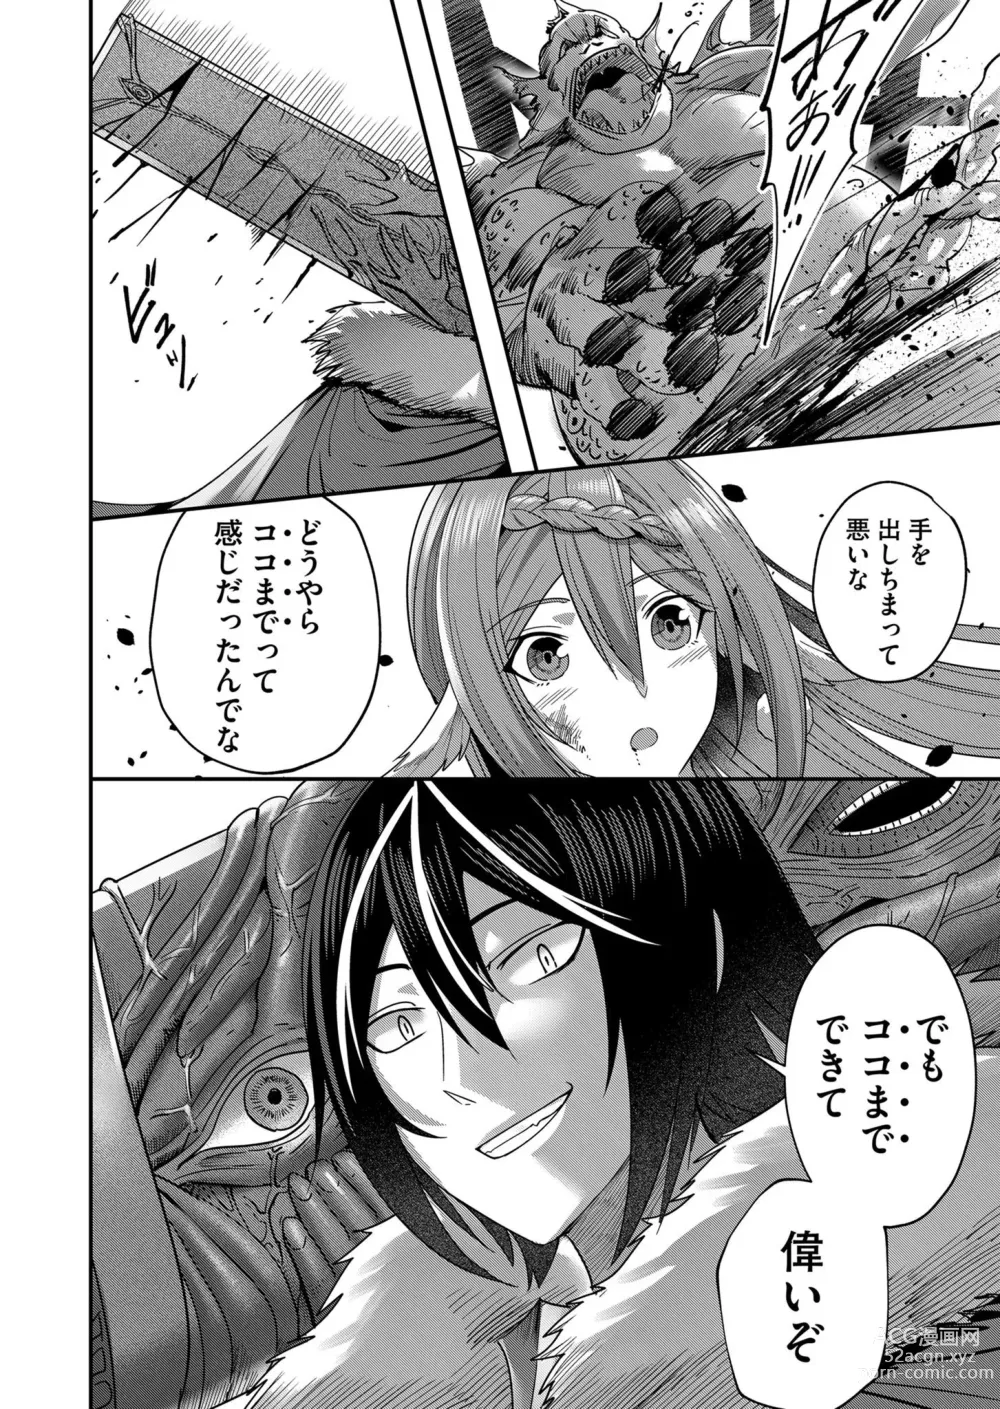 Page 184 of manga Kichiku Eiyuu Vol.01